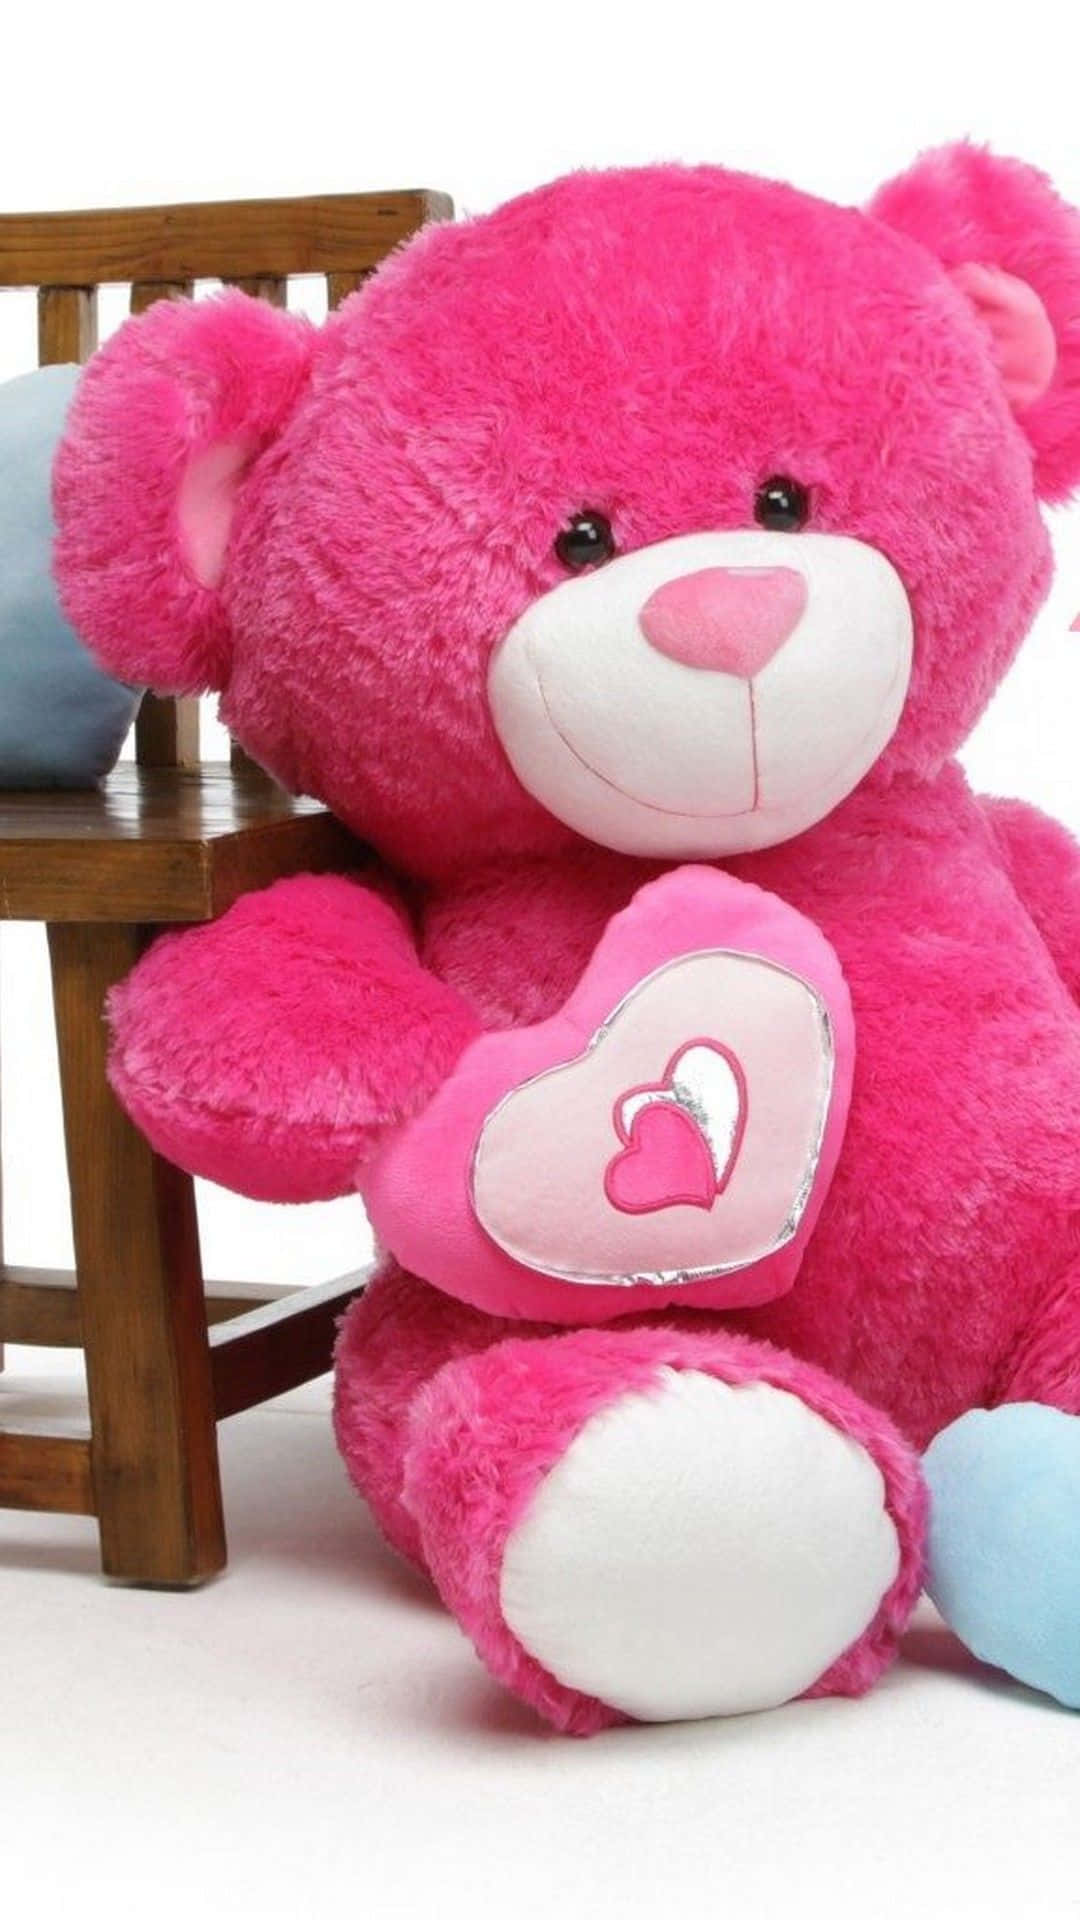 Cute Pink Teddy Bear Heart Wallpaper